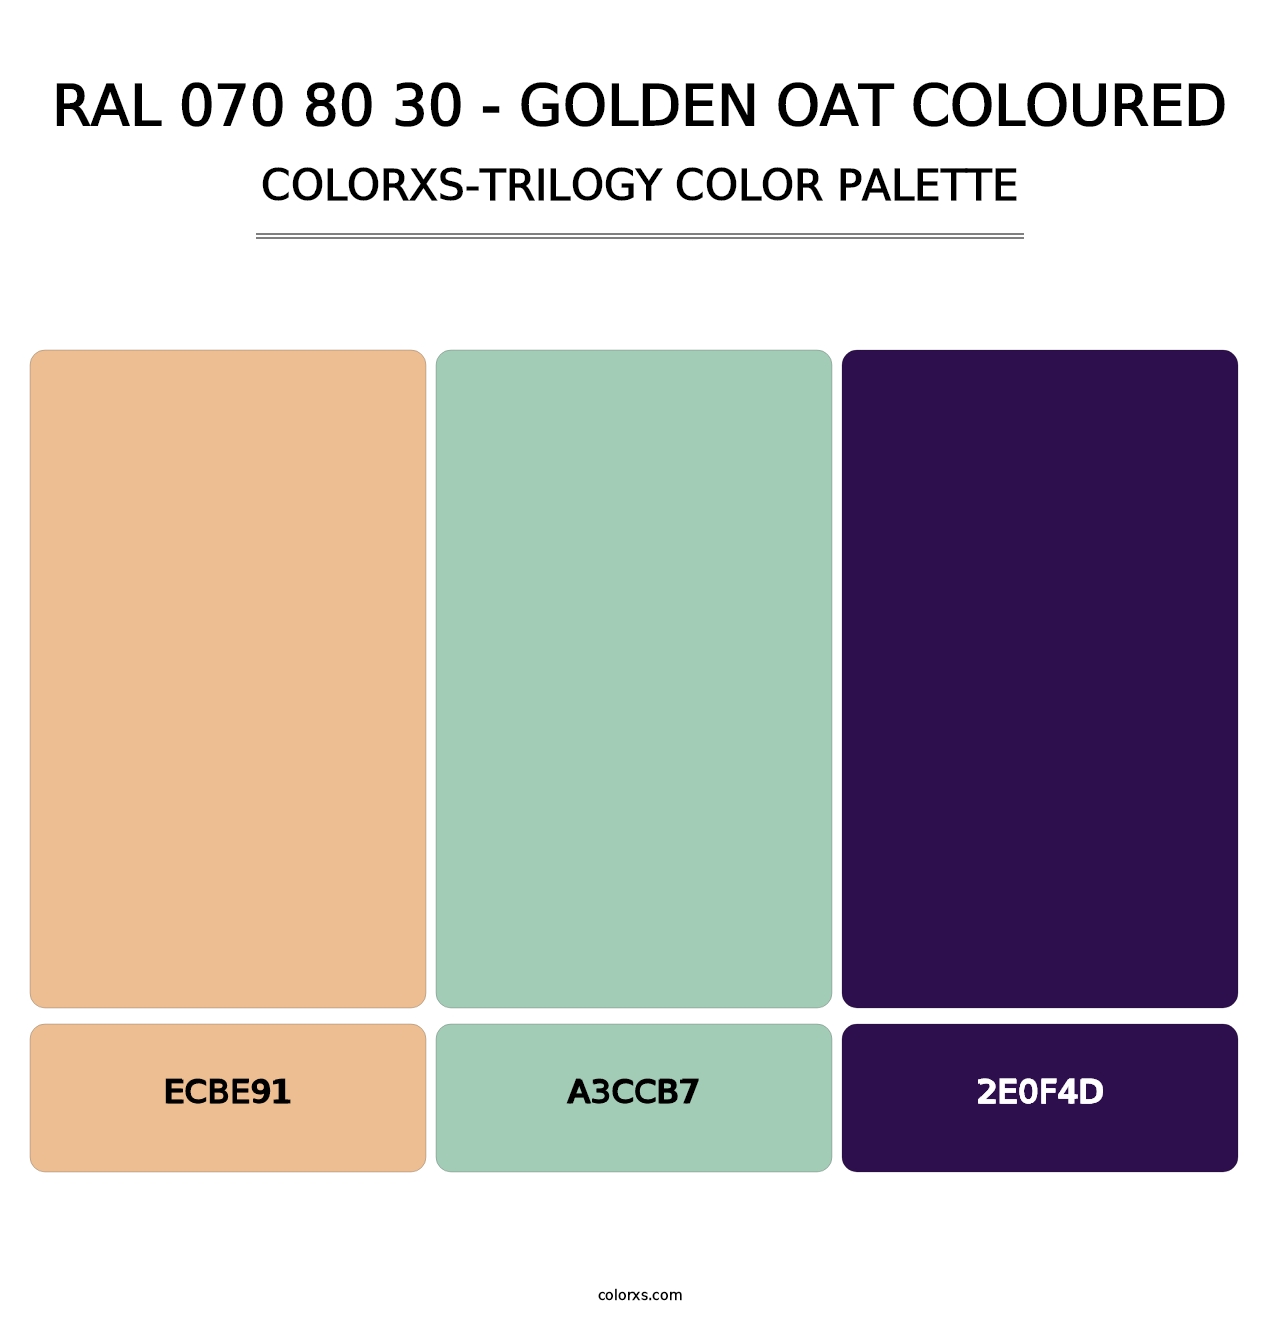 RAL 070 80 30 - Golden Oat Coloured - Colorxs Trilogy Palette